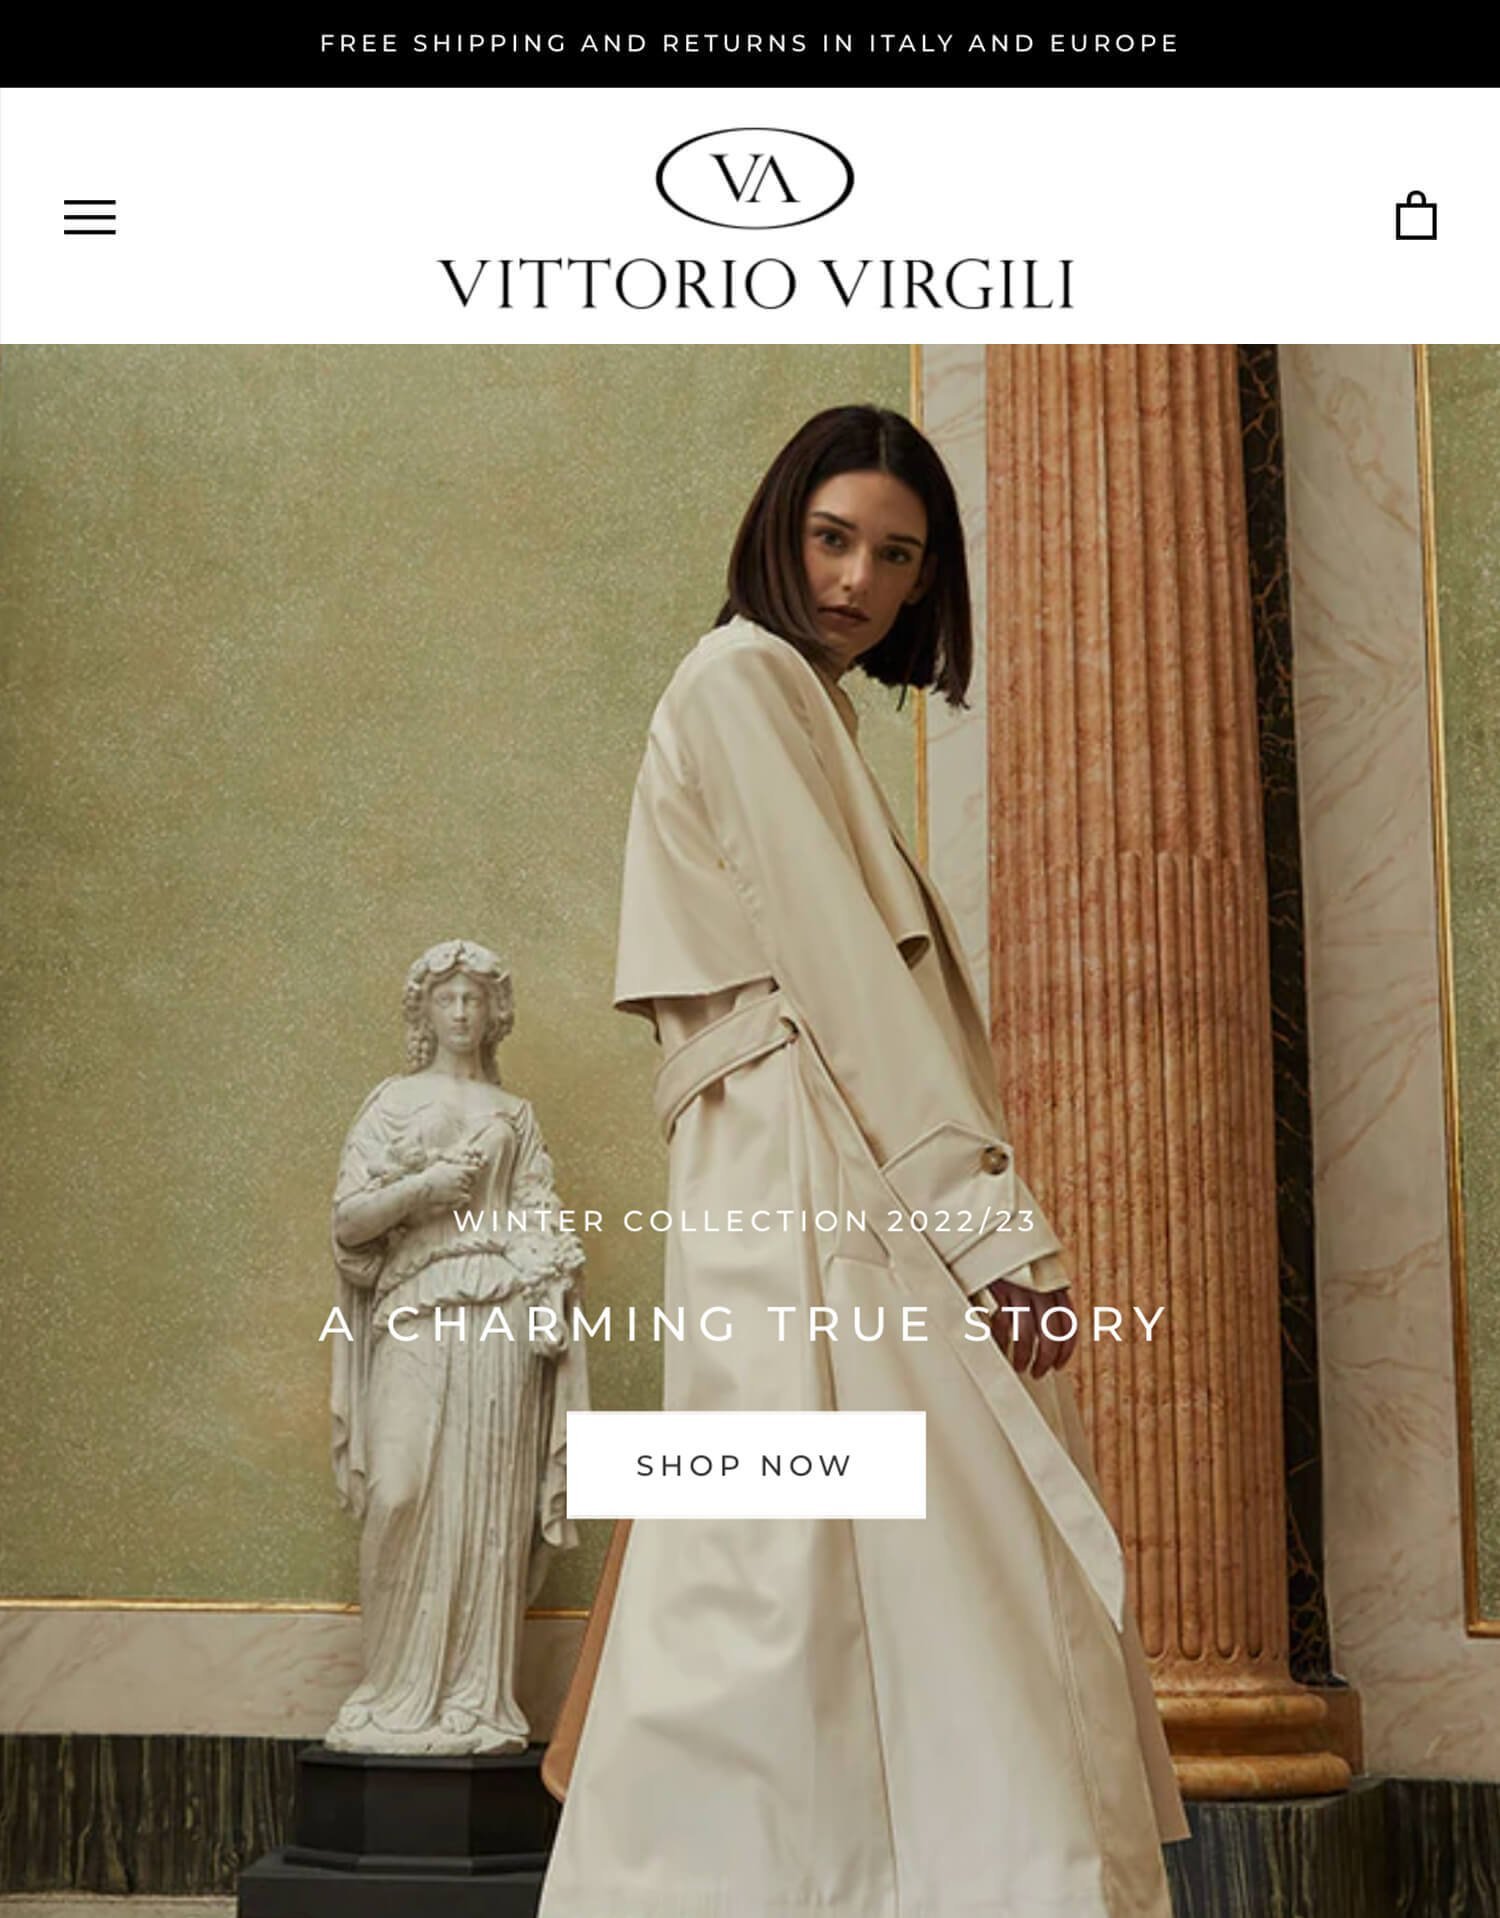 Vittoriovirgili.com